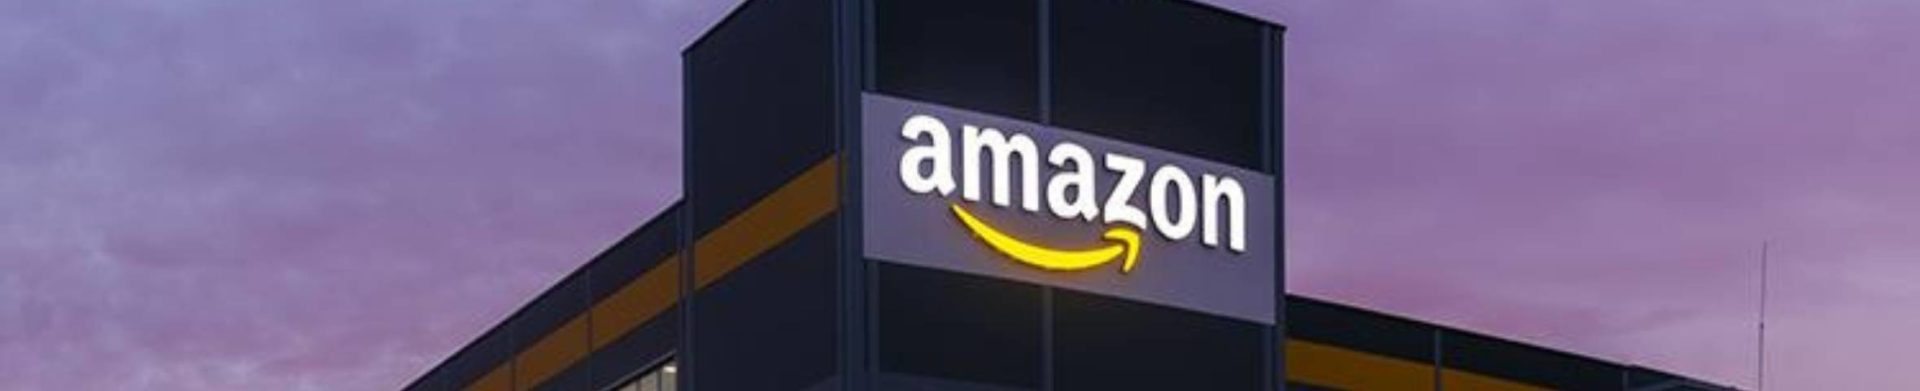 Amazon fulfillment center that's hiring